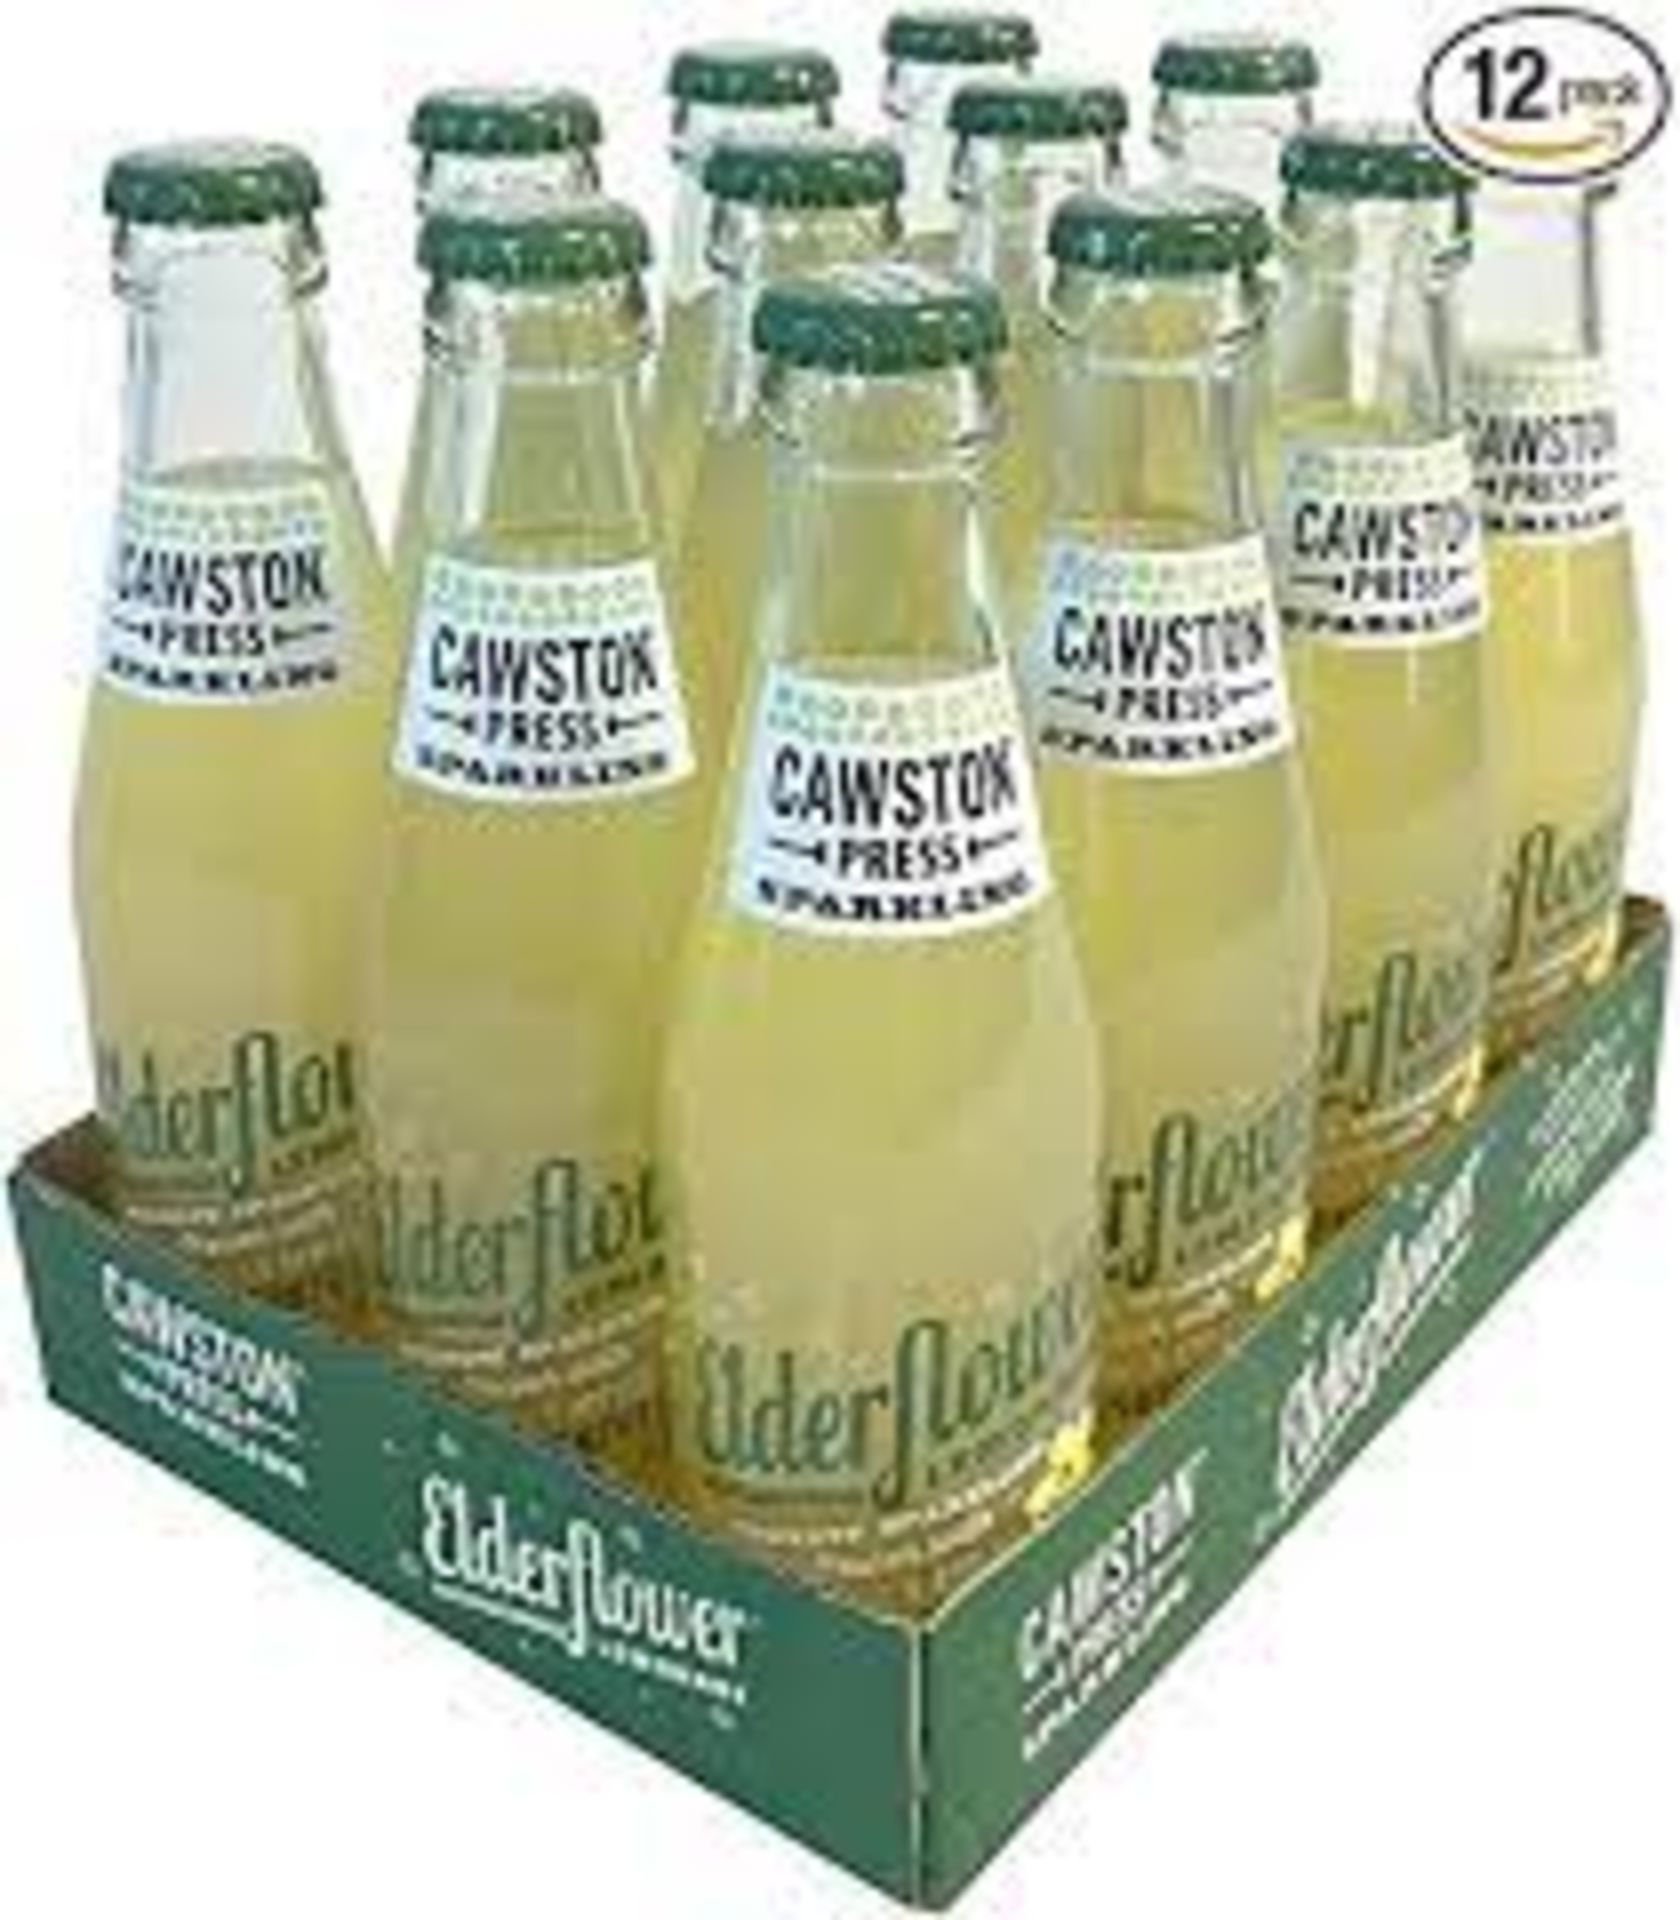 RRP £983 (Count 77) Spw14W8609M Cawston Press Sparkling Elderflower Lemonade Drink - 12 X 250Ml